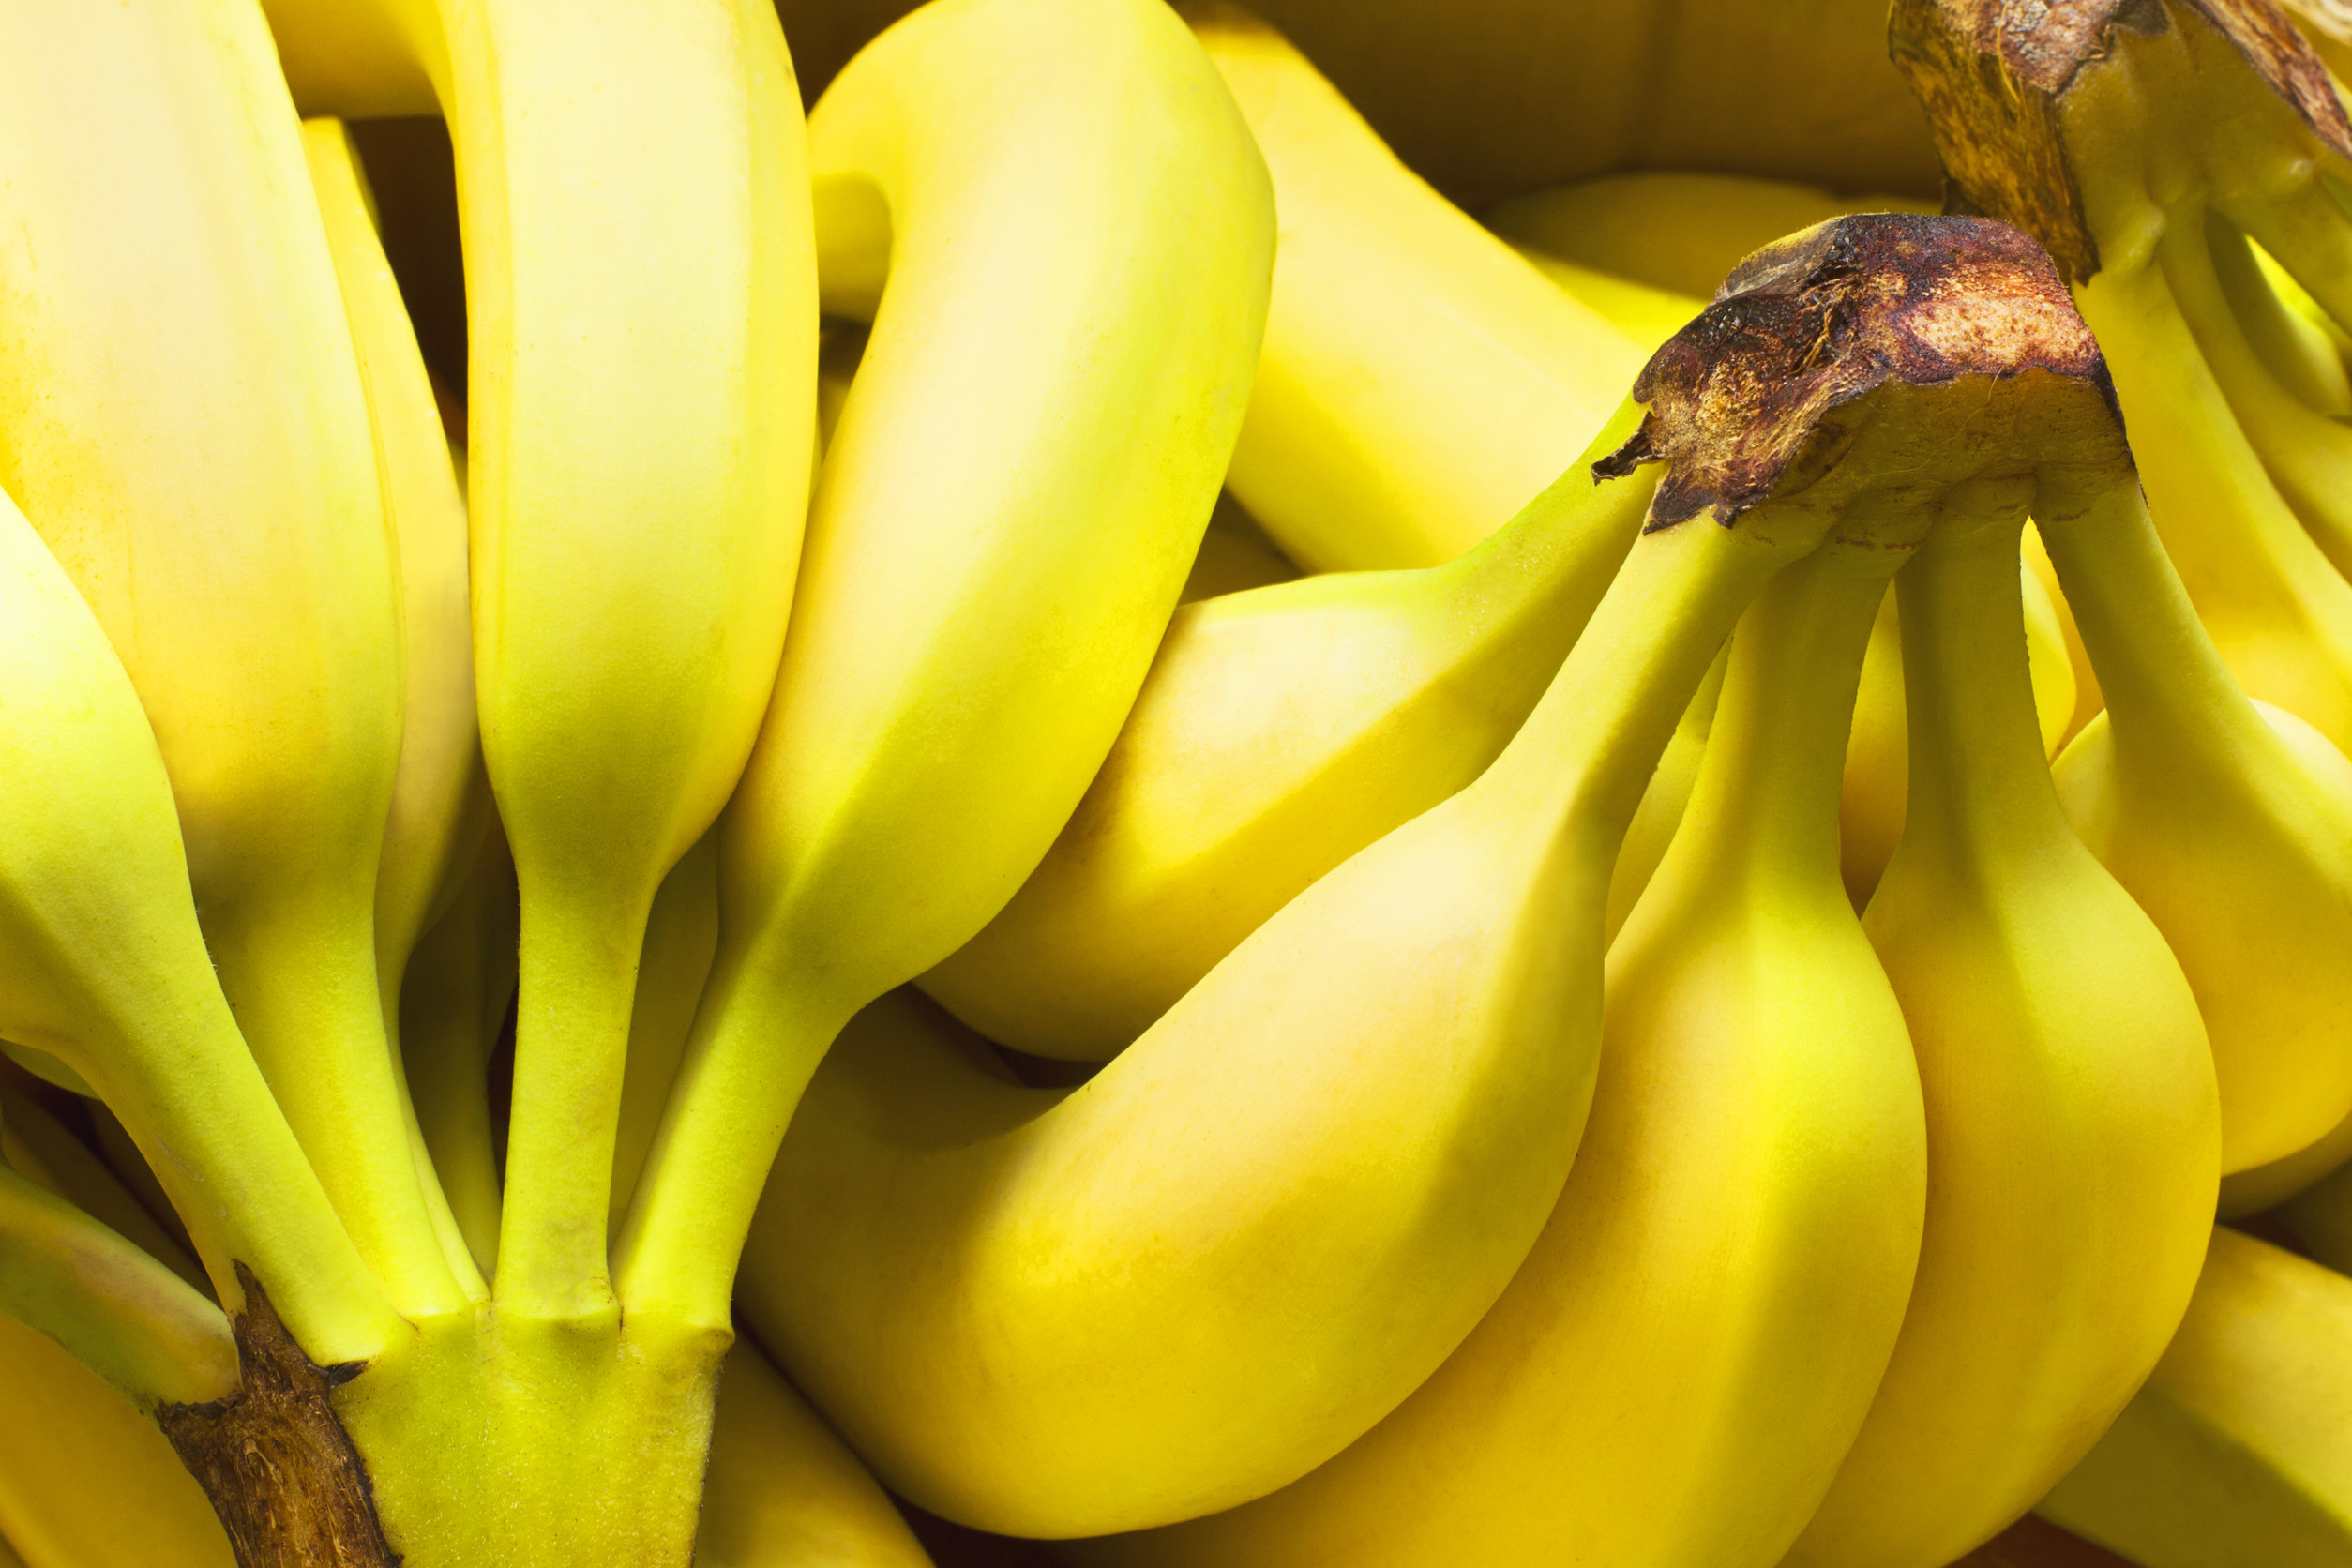 Banany sposobem na paliwo wodorowe?
